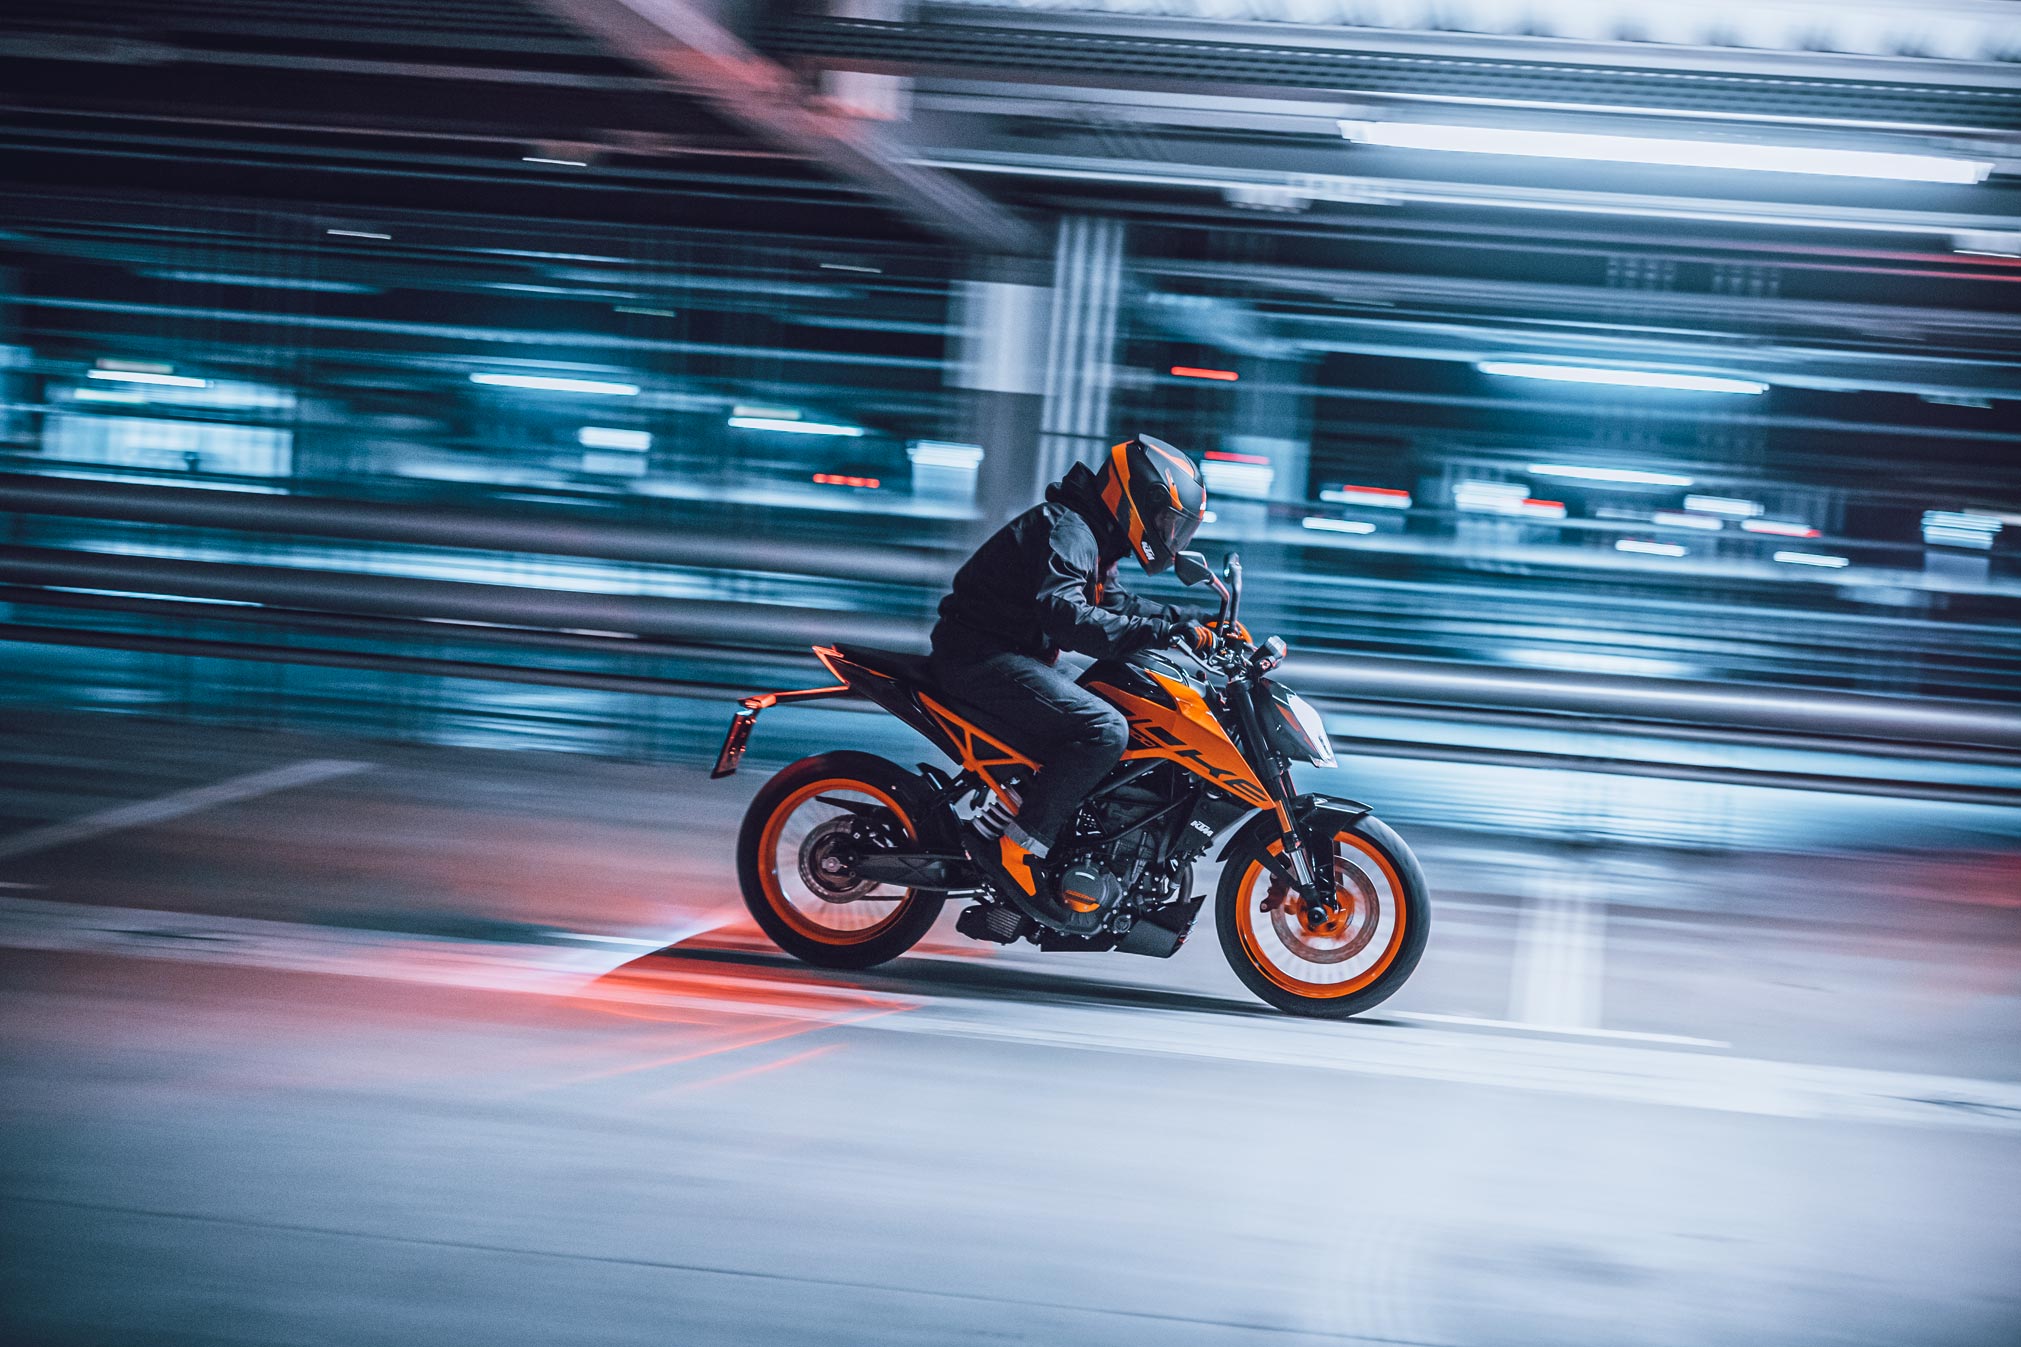 2021 KTM 200 Duke Guide • Total Motorcycle